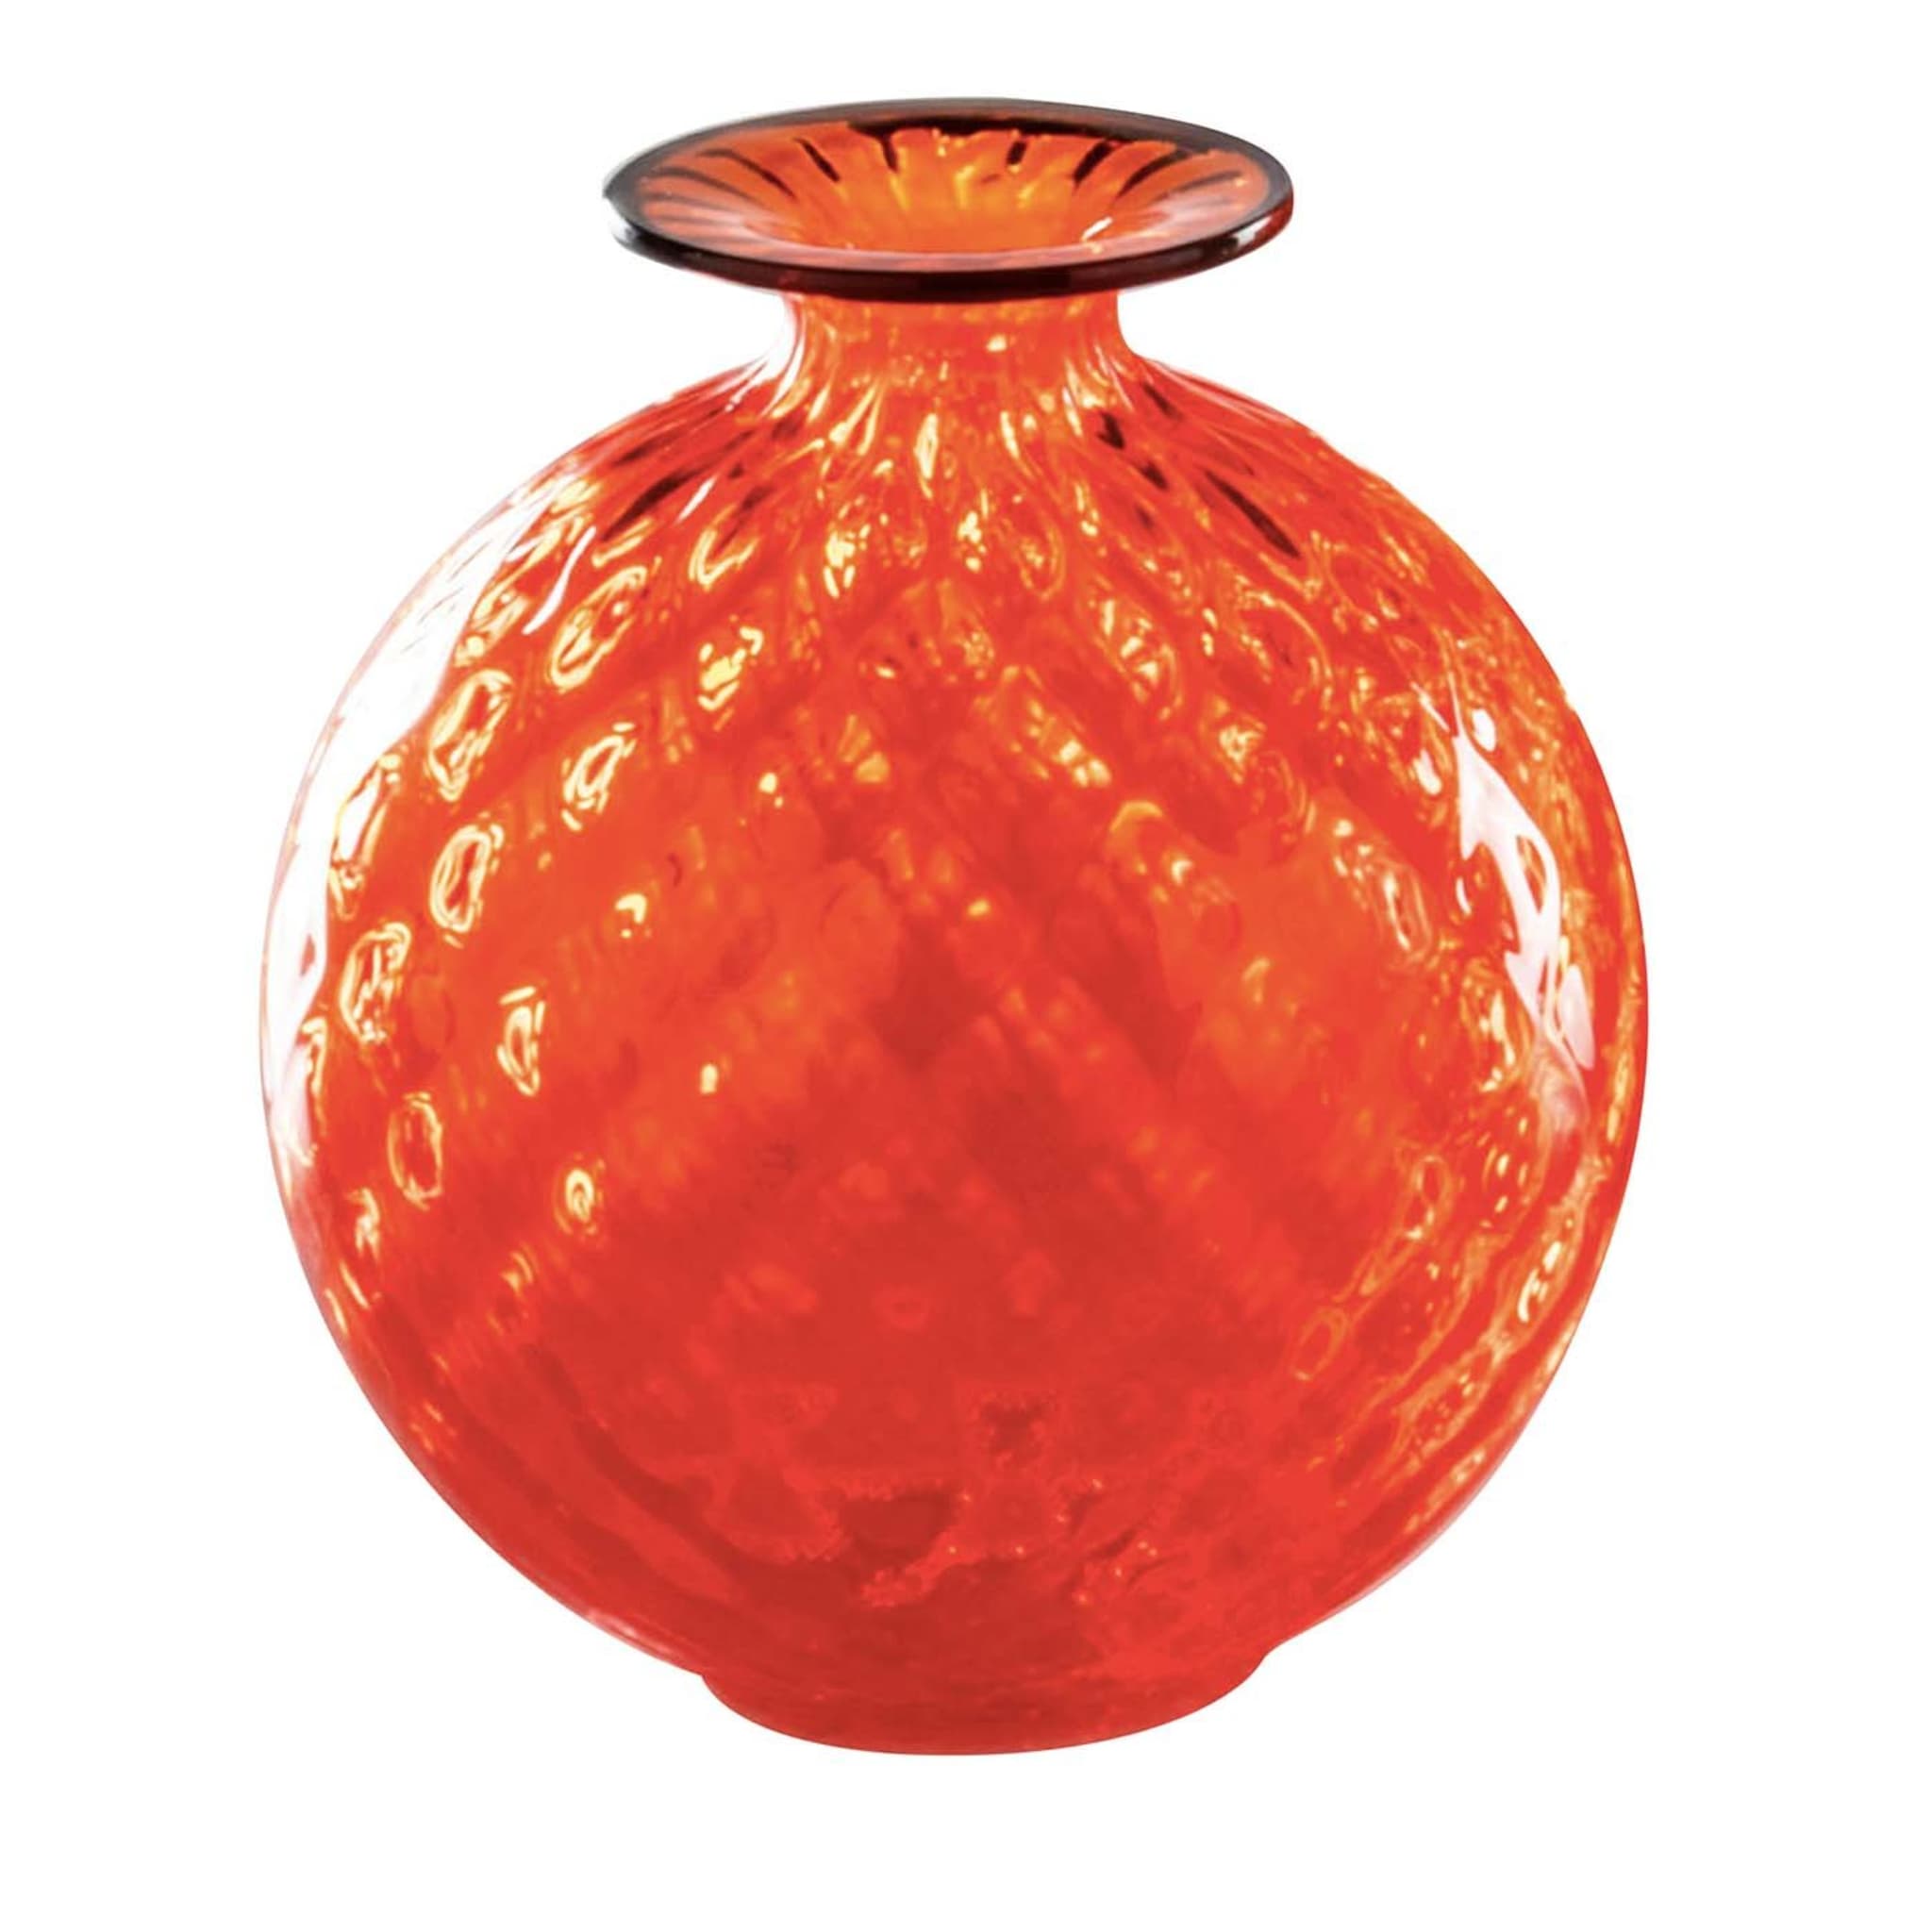 Monofiori Red Balloton Vase - Main view